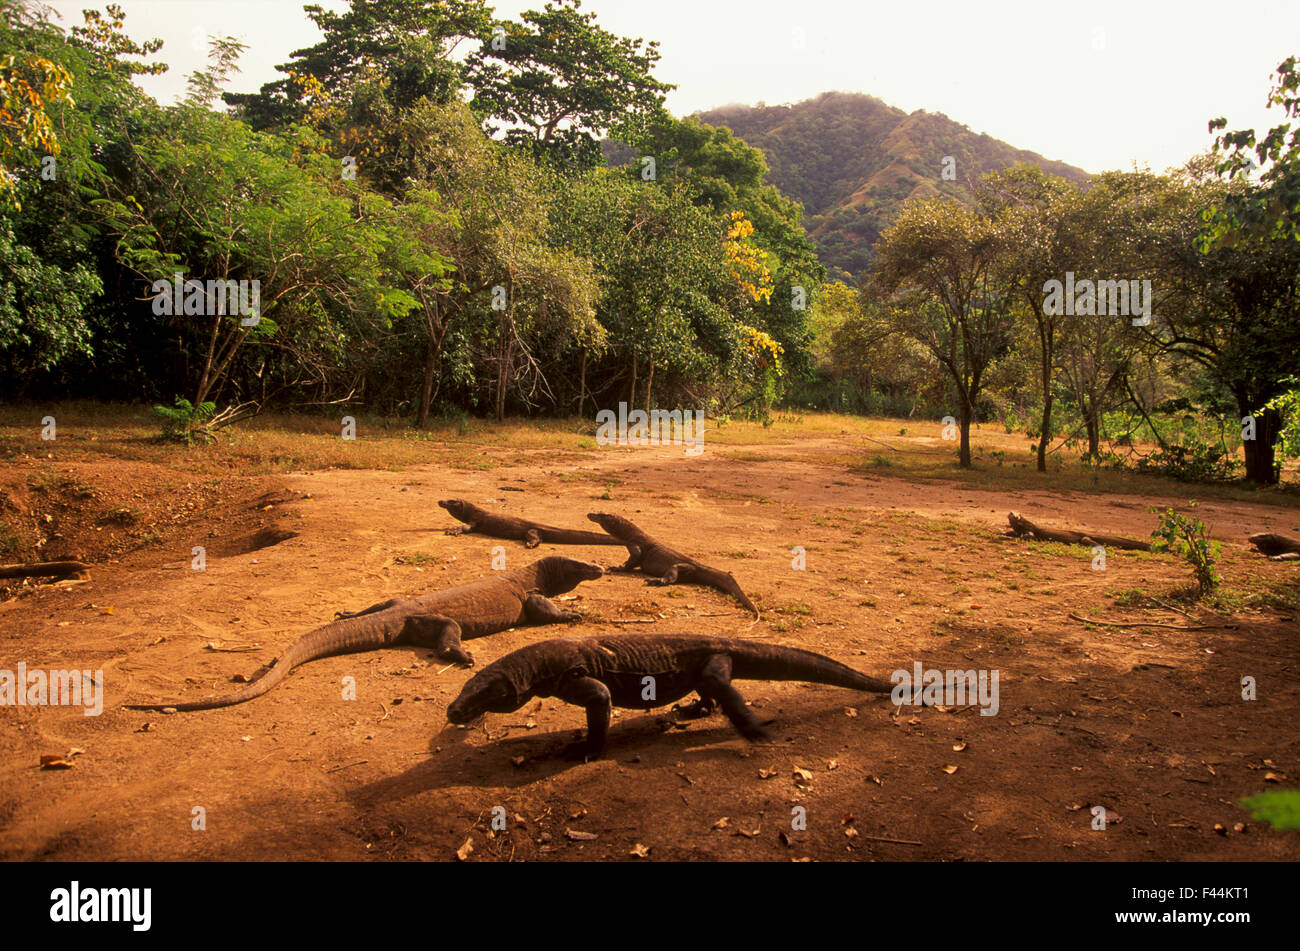 Komodo dragons (Varanus komodoensis) in forest clearing, Komodo Island, Indonesia Stock Photo